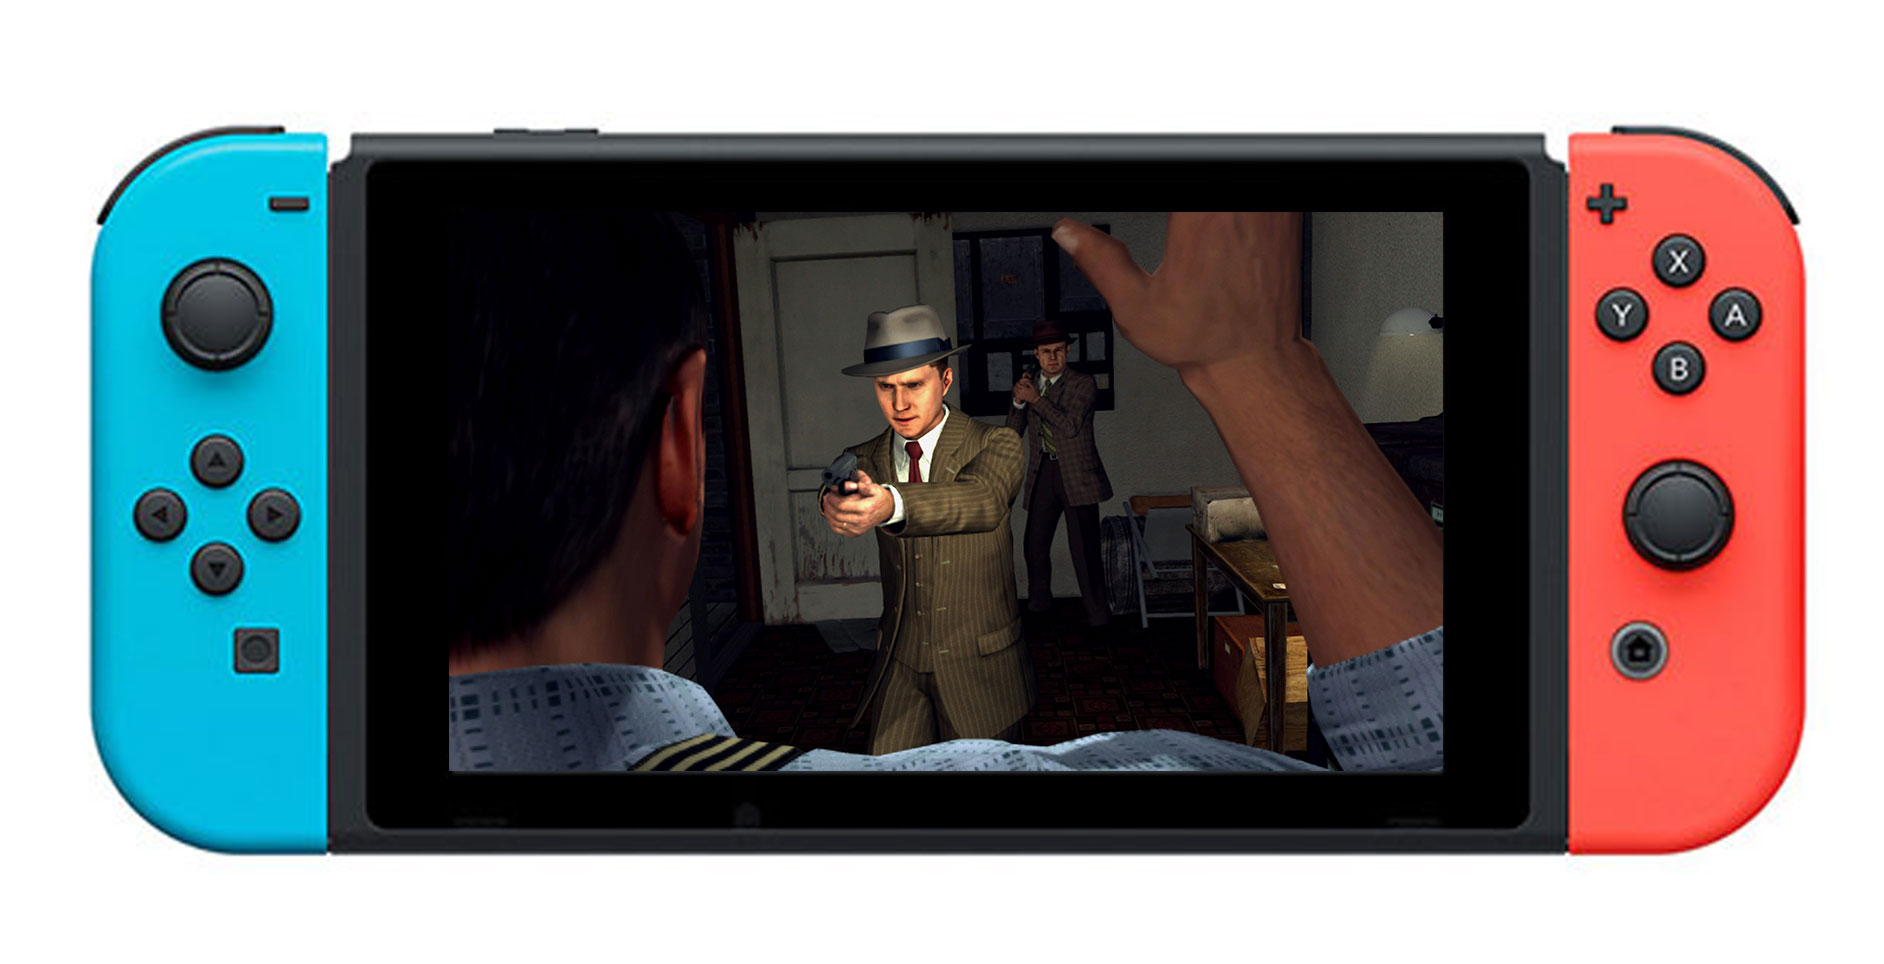 Played L.A. Noire On Nintendo Switch Boy It's Good